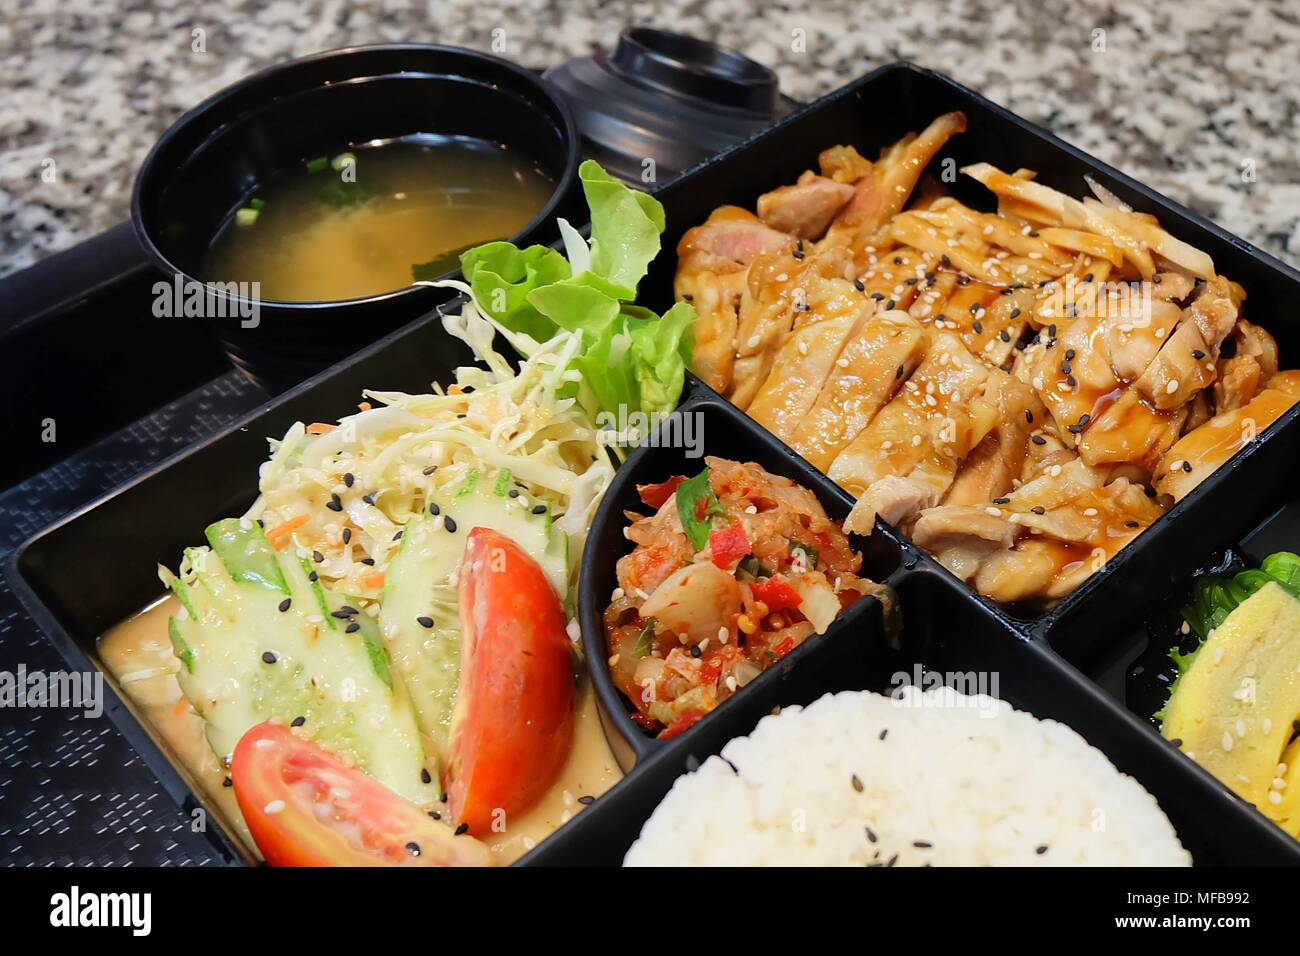 https://c8.alamy.com/comp/MFB992/traditional-japan-cuisine-bento-box-or-multi-layered-box-with-teriyaki-chicken-rice-salad-tamagoyaki-or-rolled-omelette-hiyashi-wakame-or-seaweed-MFB992.jpg